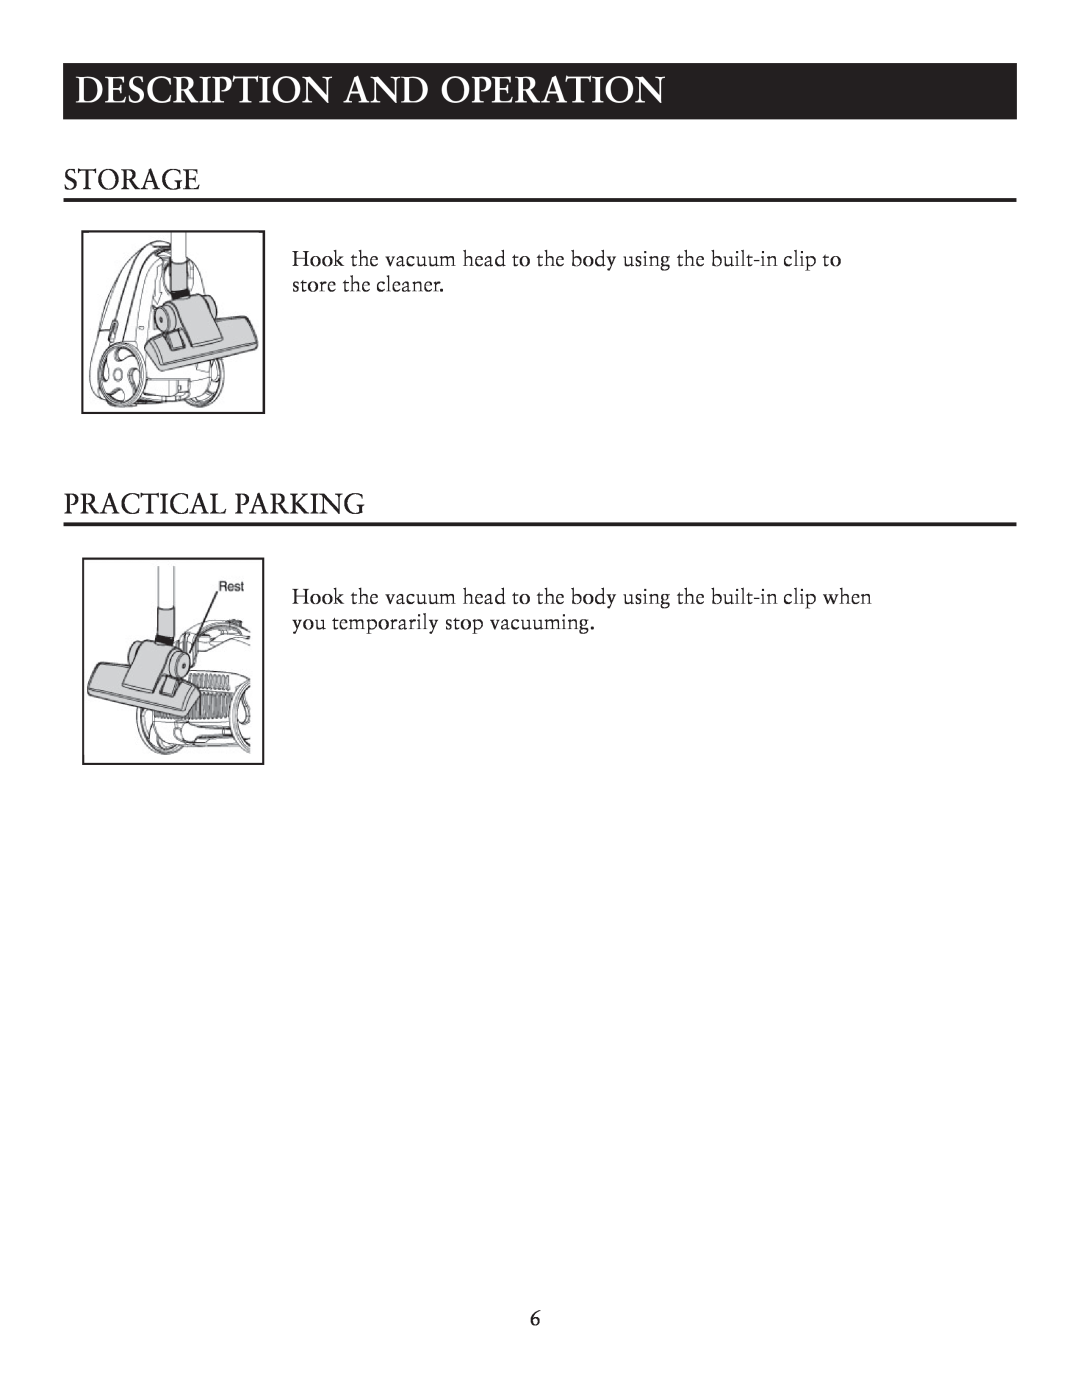 Sunbeam SNV11CBRB user manual Storage, Practical Parking, Description And Operation 